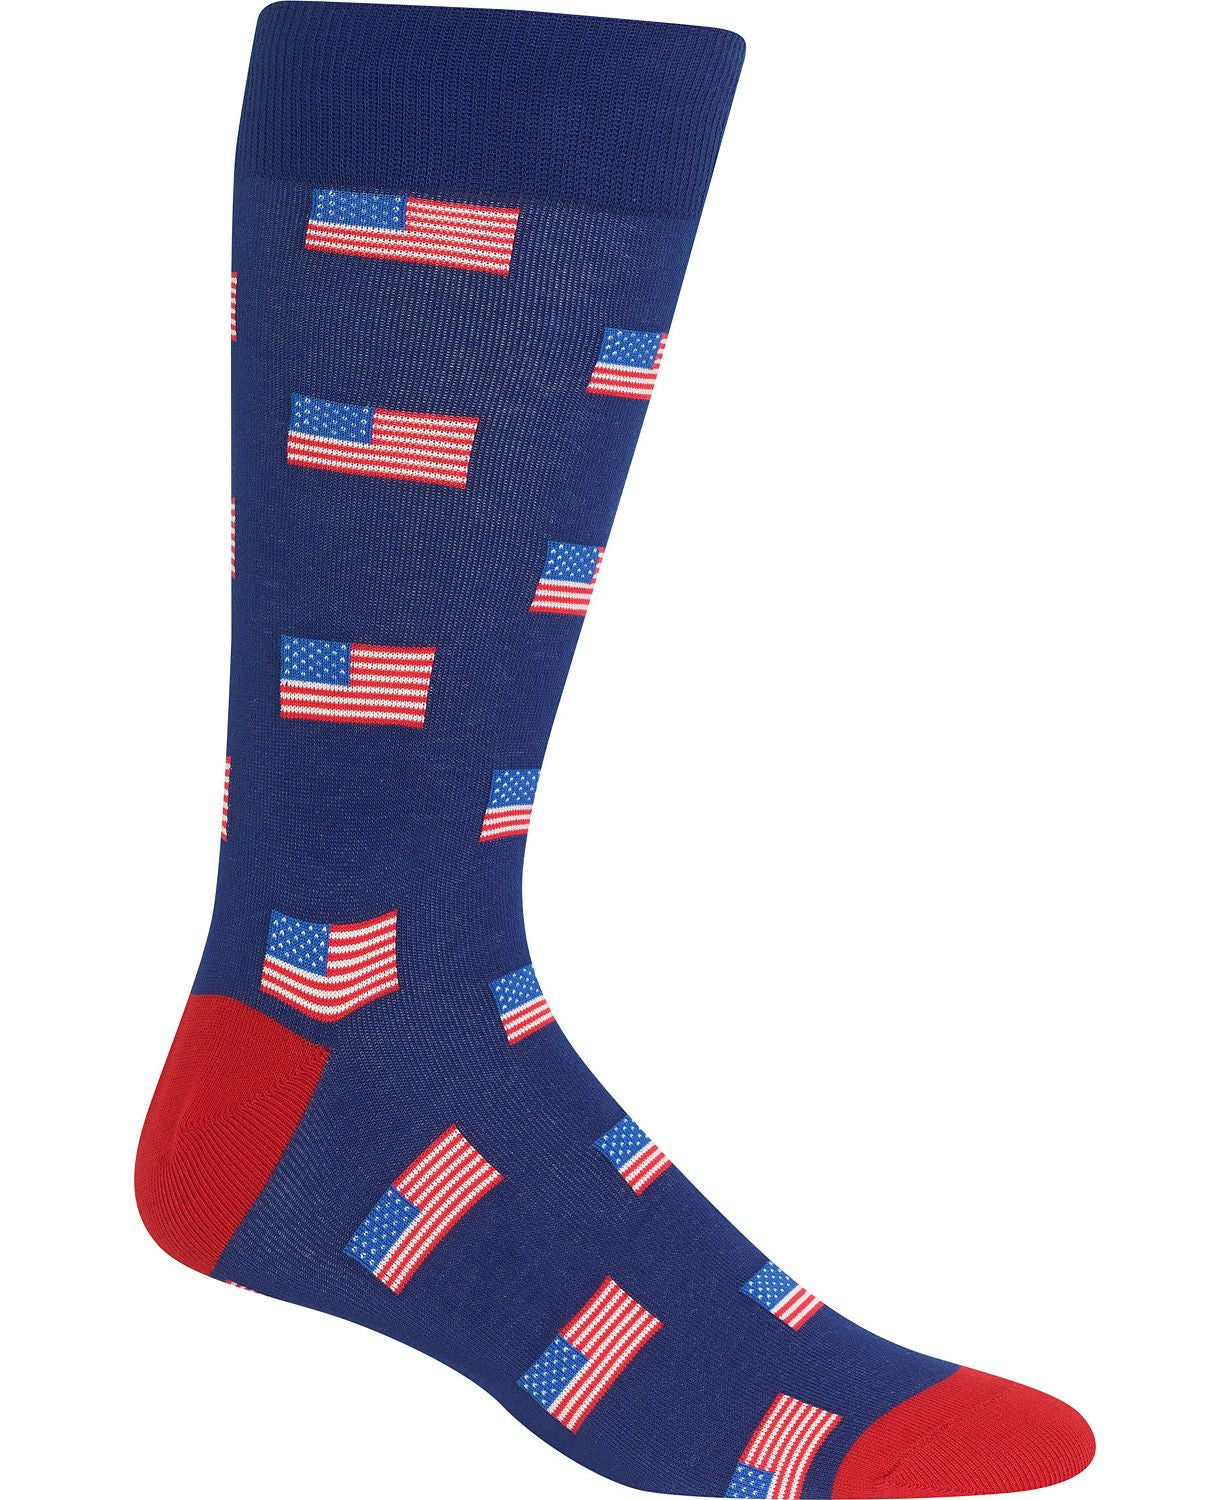 Hot Sox Socks American Flag Crew Dark Blue